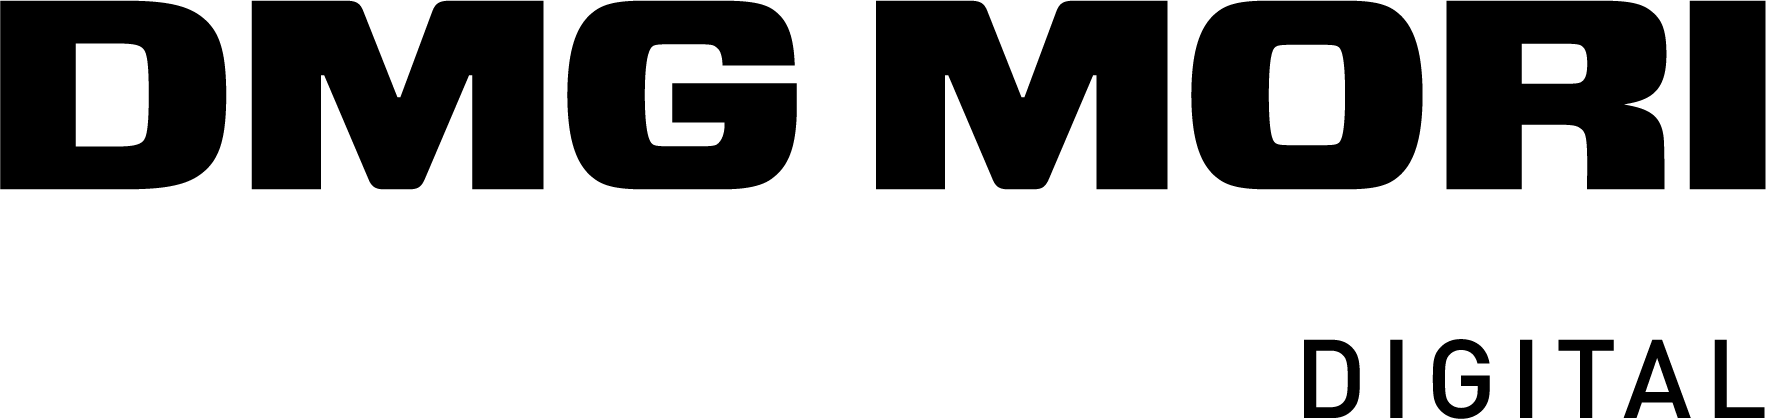 DMG MORI Digital株式会社 のロゴ